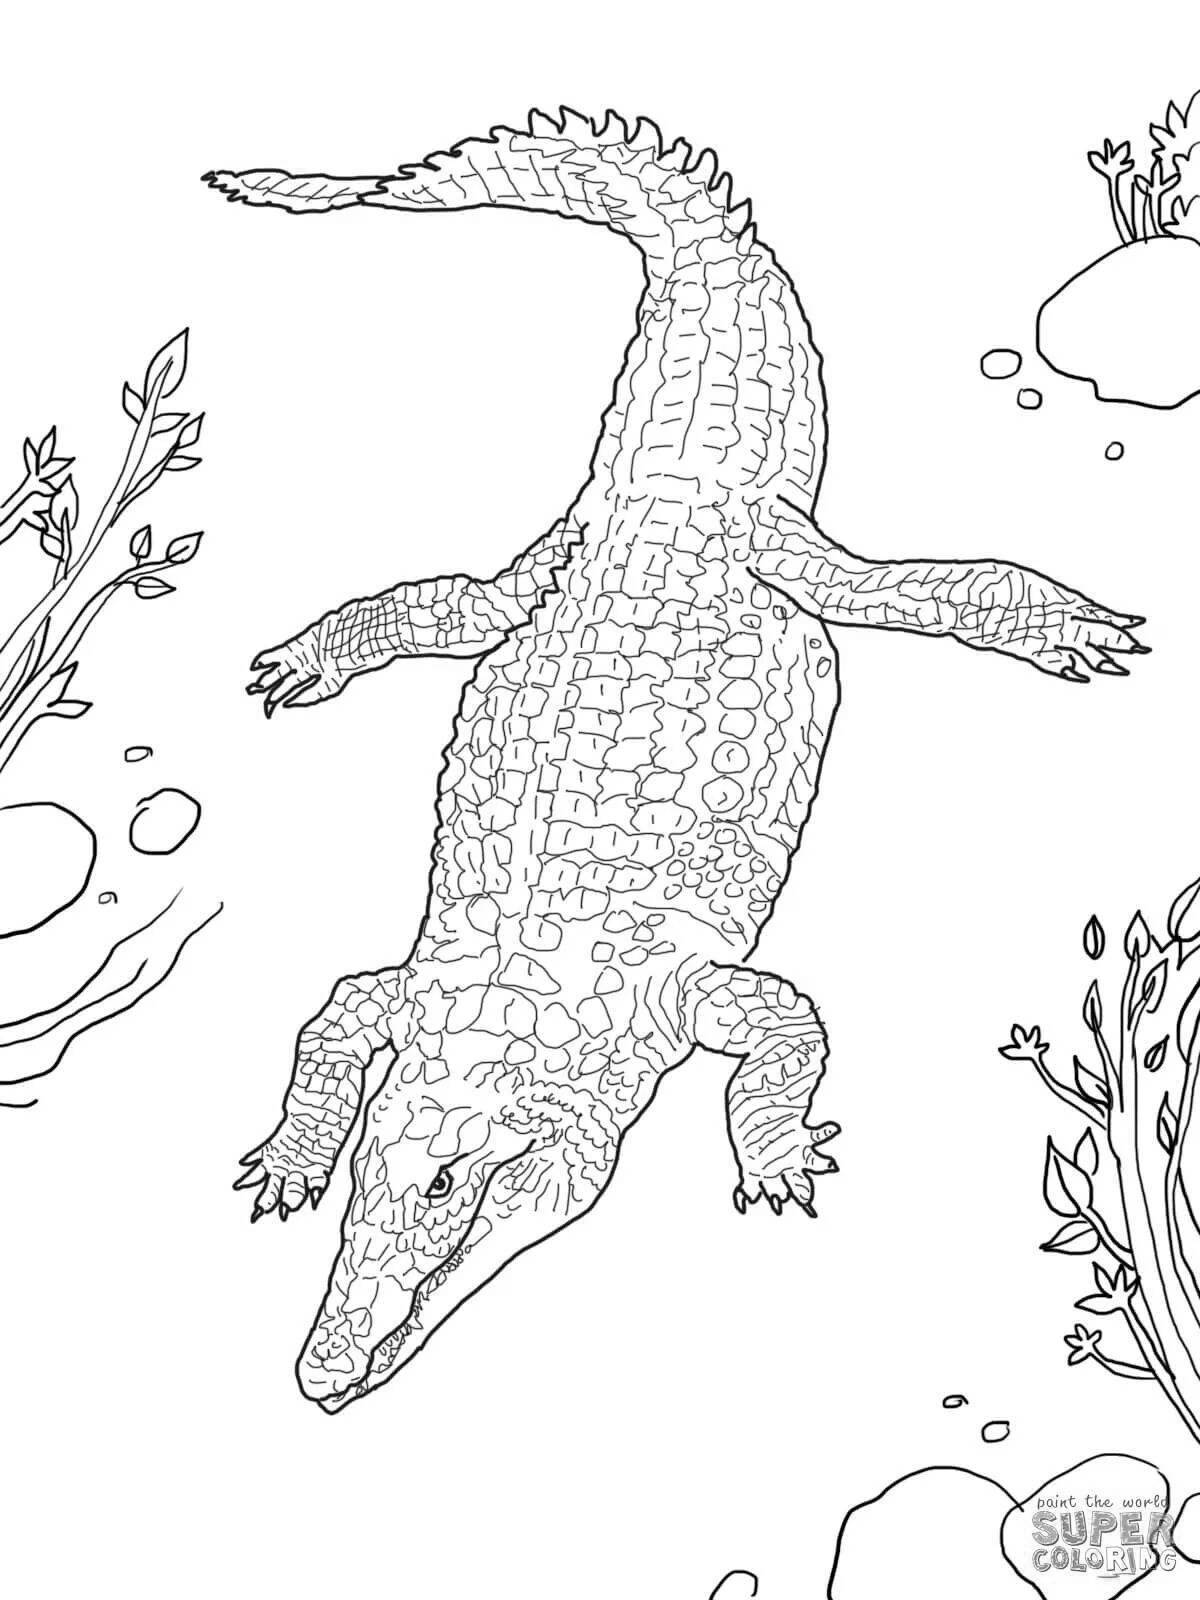 Monty's intriguing alligator coloring book